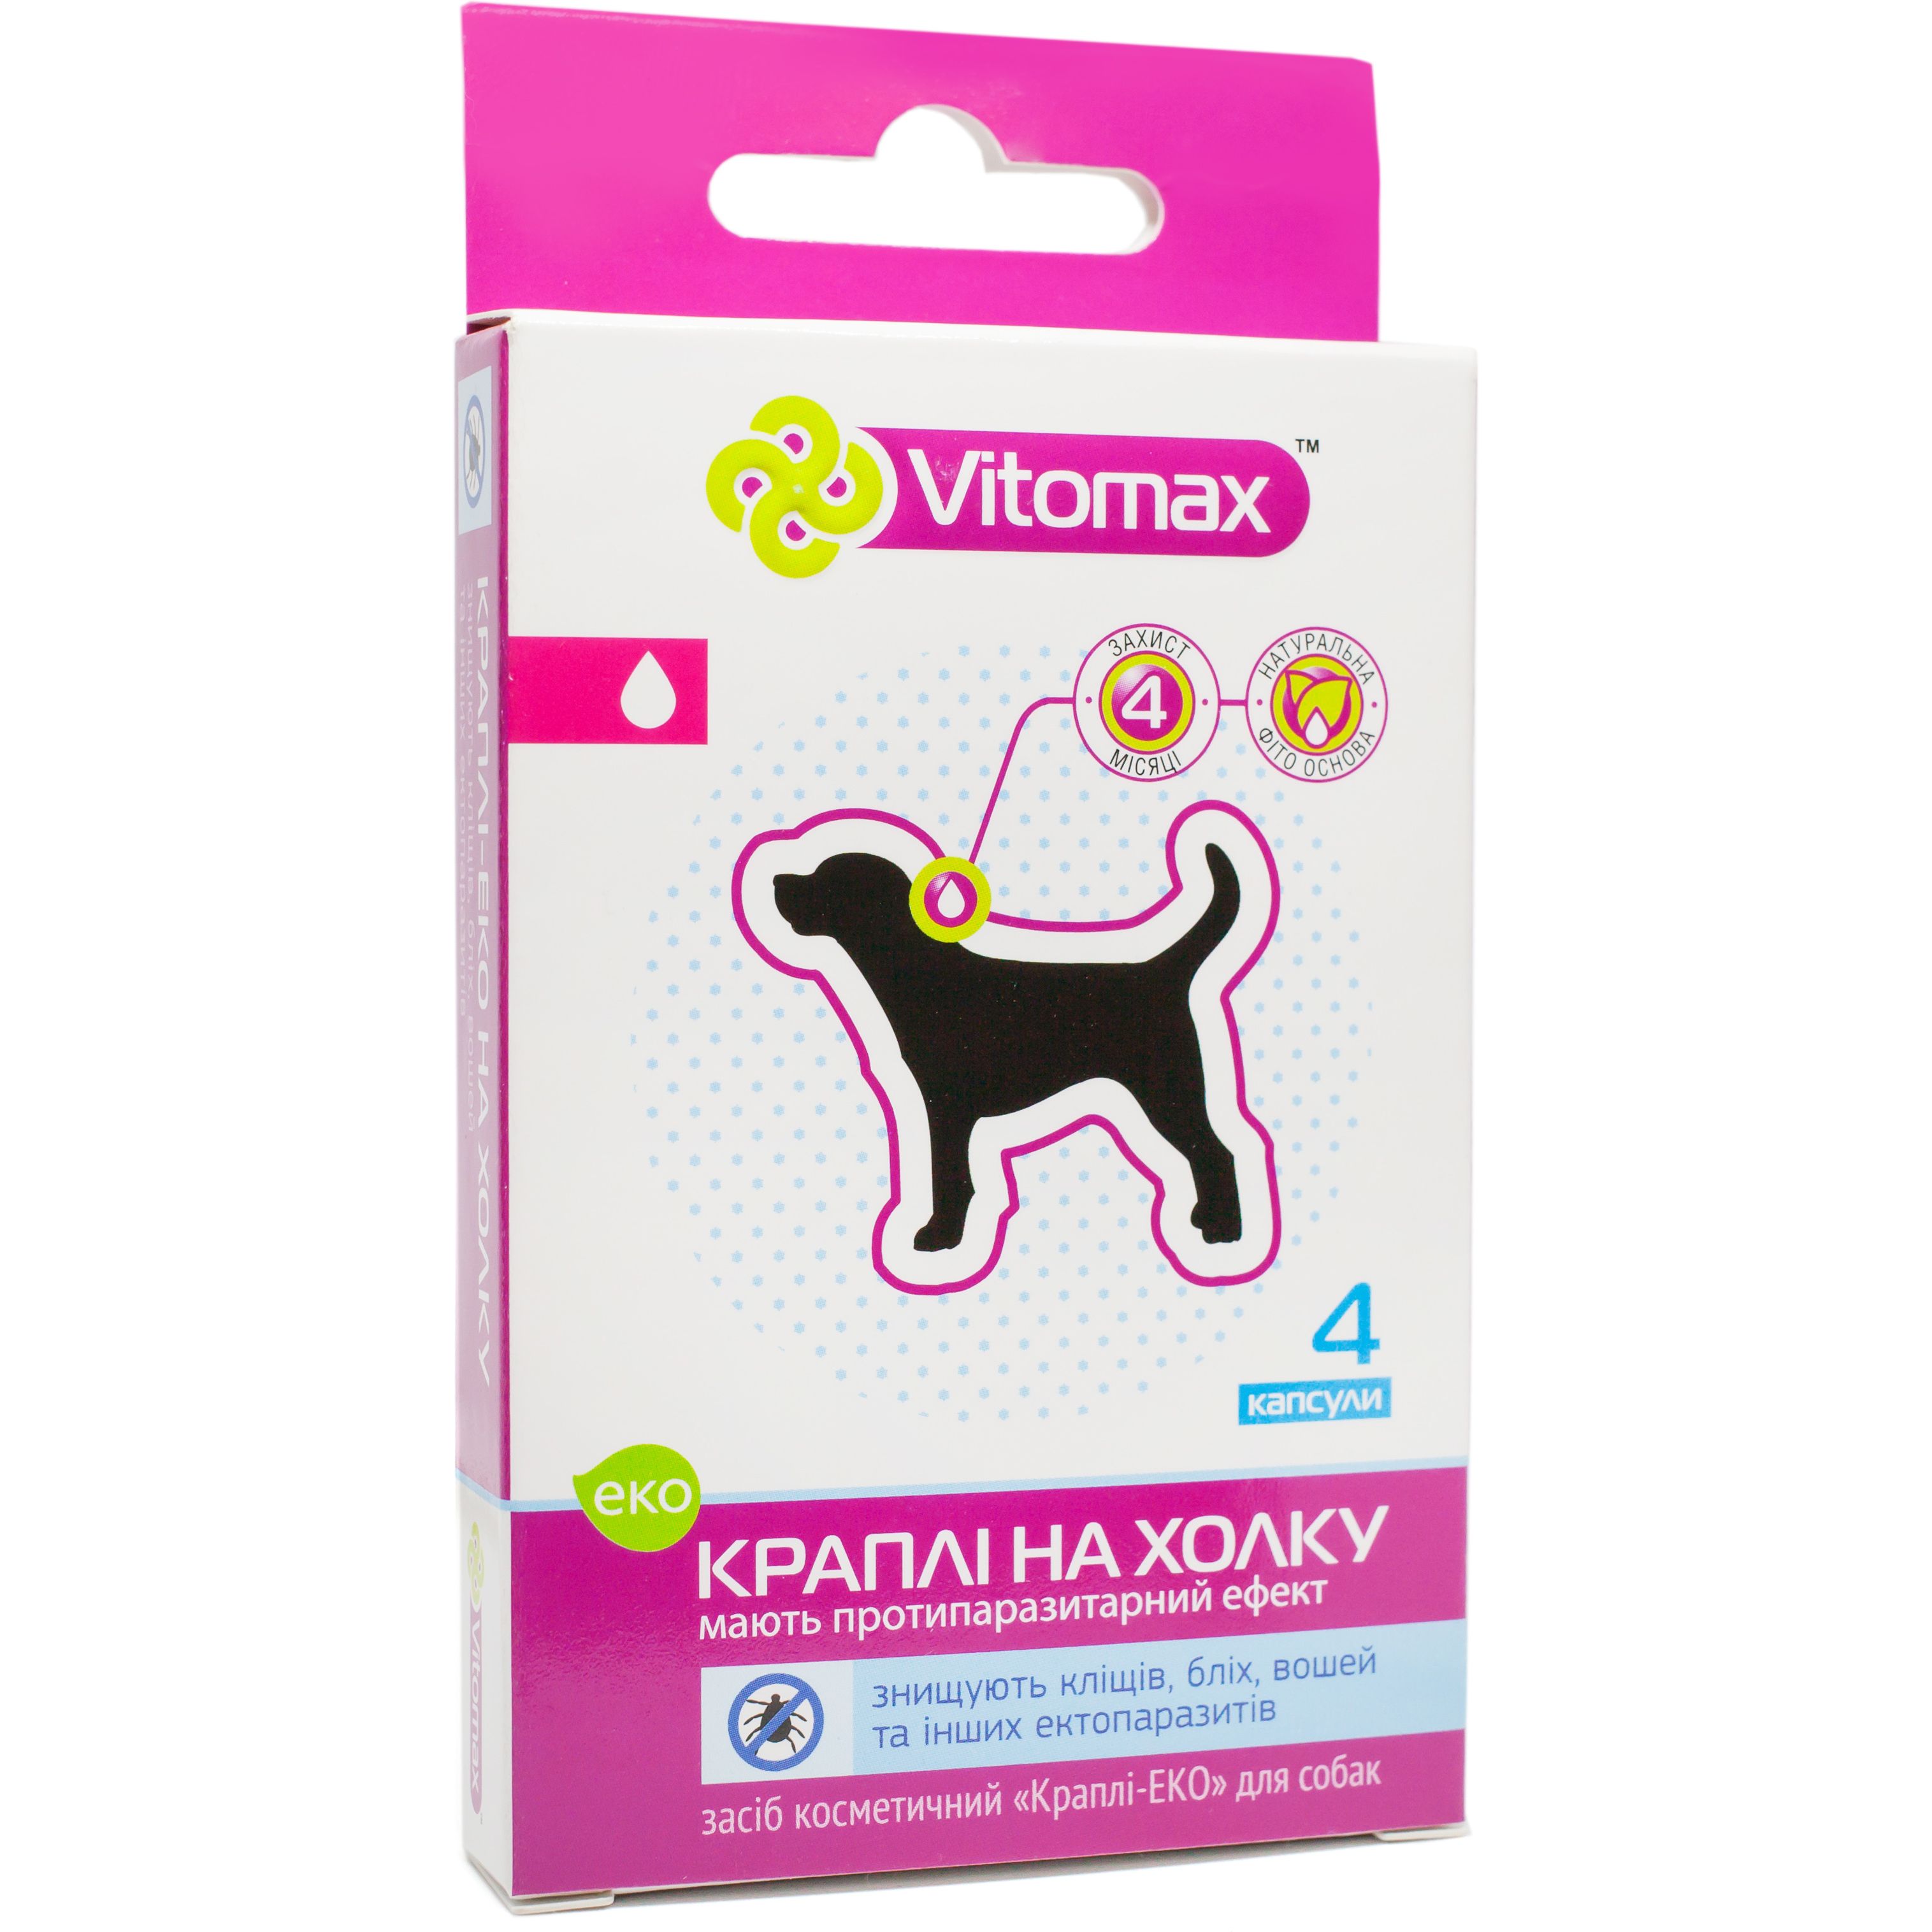 Эко-капли на холку Vitomax противопаразитарные для собак, 0.8 мл, 4 пипетки - фото 1